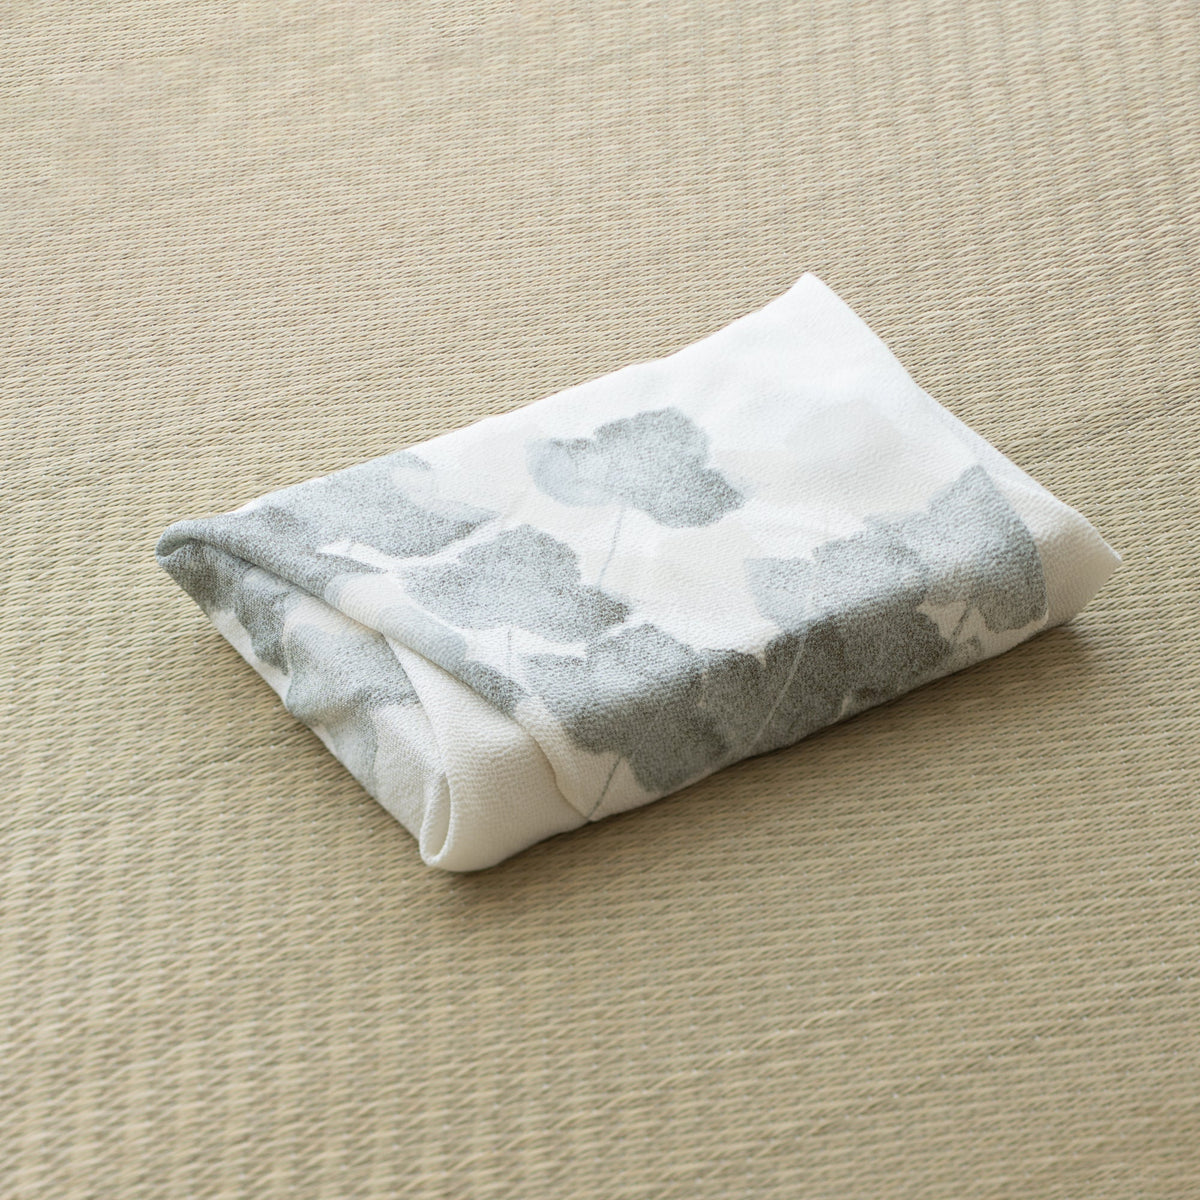 IVY Rice Effect Bath Sheet Towel Pack